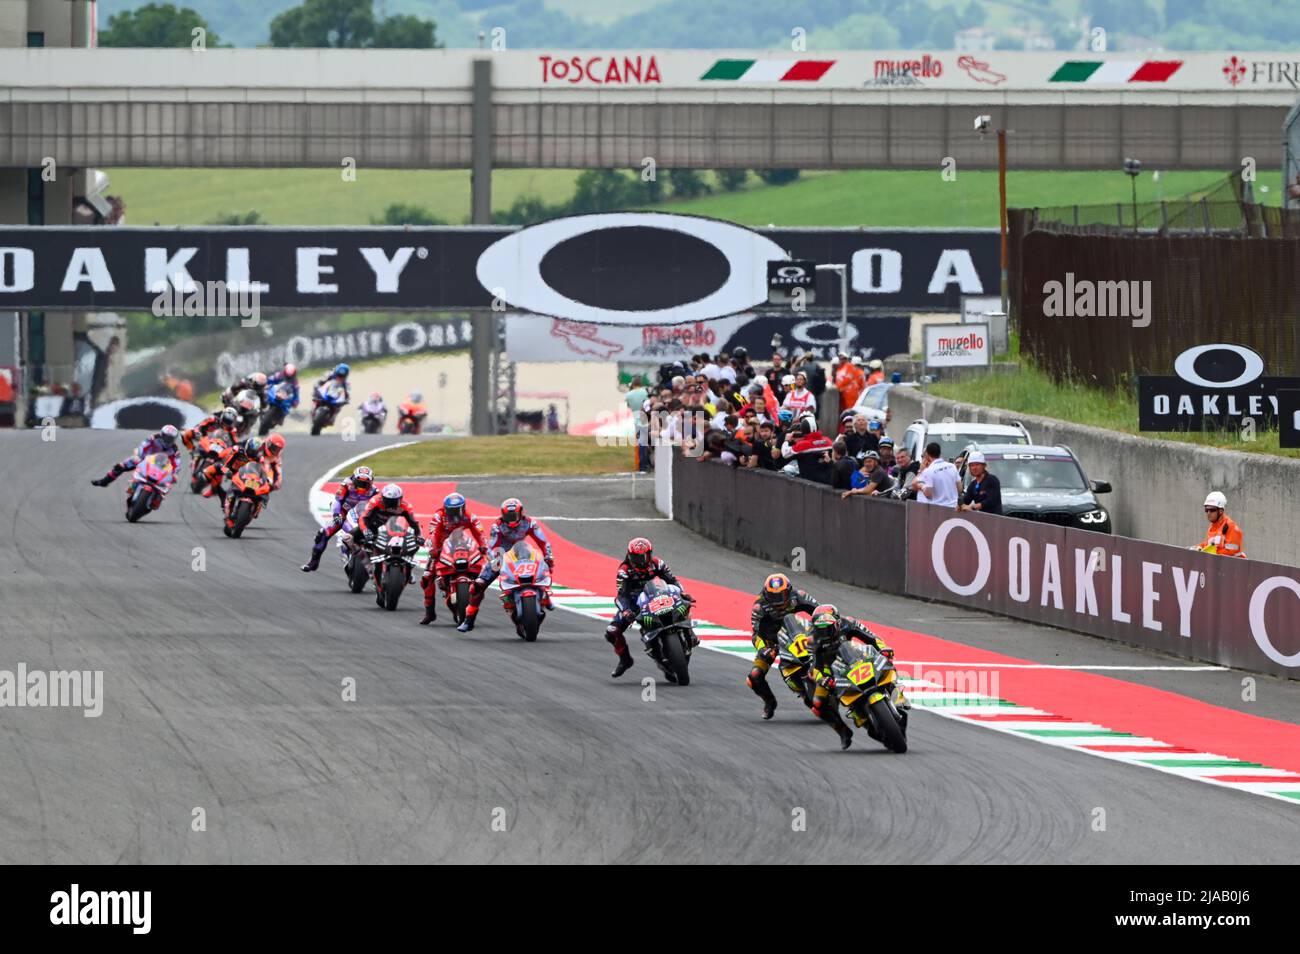 La grille de départ de la course MotoGP lors du Championnat du monde MotoGP  Gran Premio d'Italia Oakley Race le 29 mai 2022 au circuit international de  Mugello à Scarperia (FI), Italie (